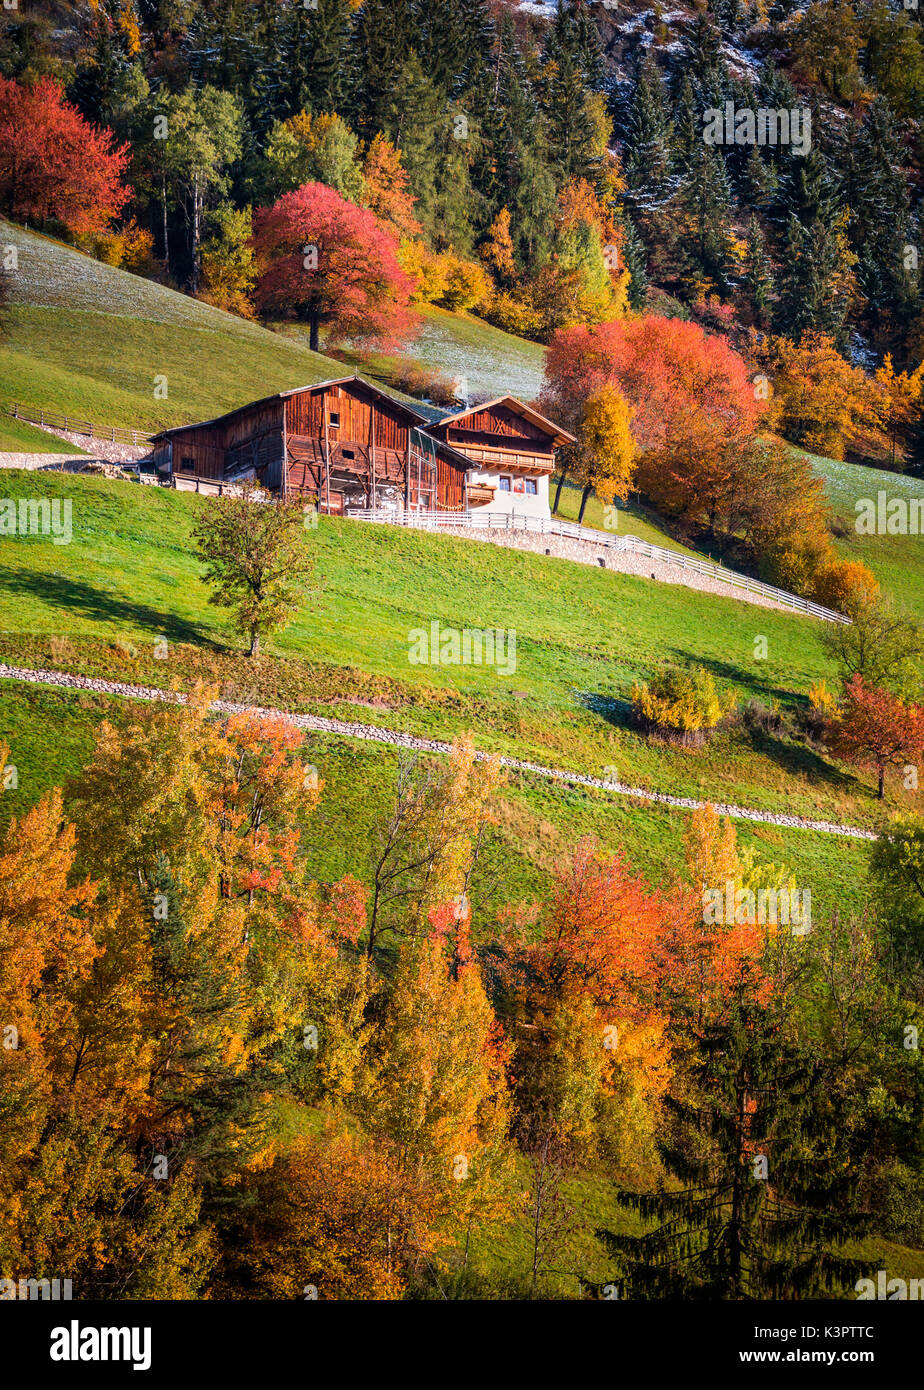 Val di Funes, Trentino Alto Adige, Italy Stock Photo